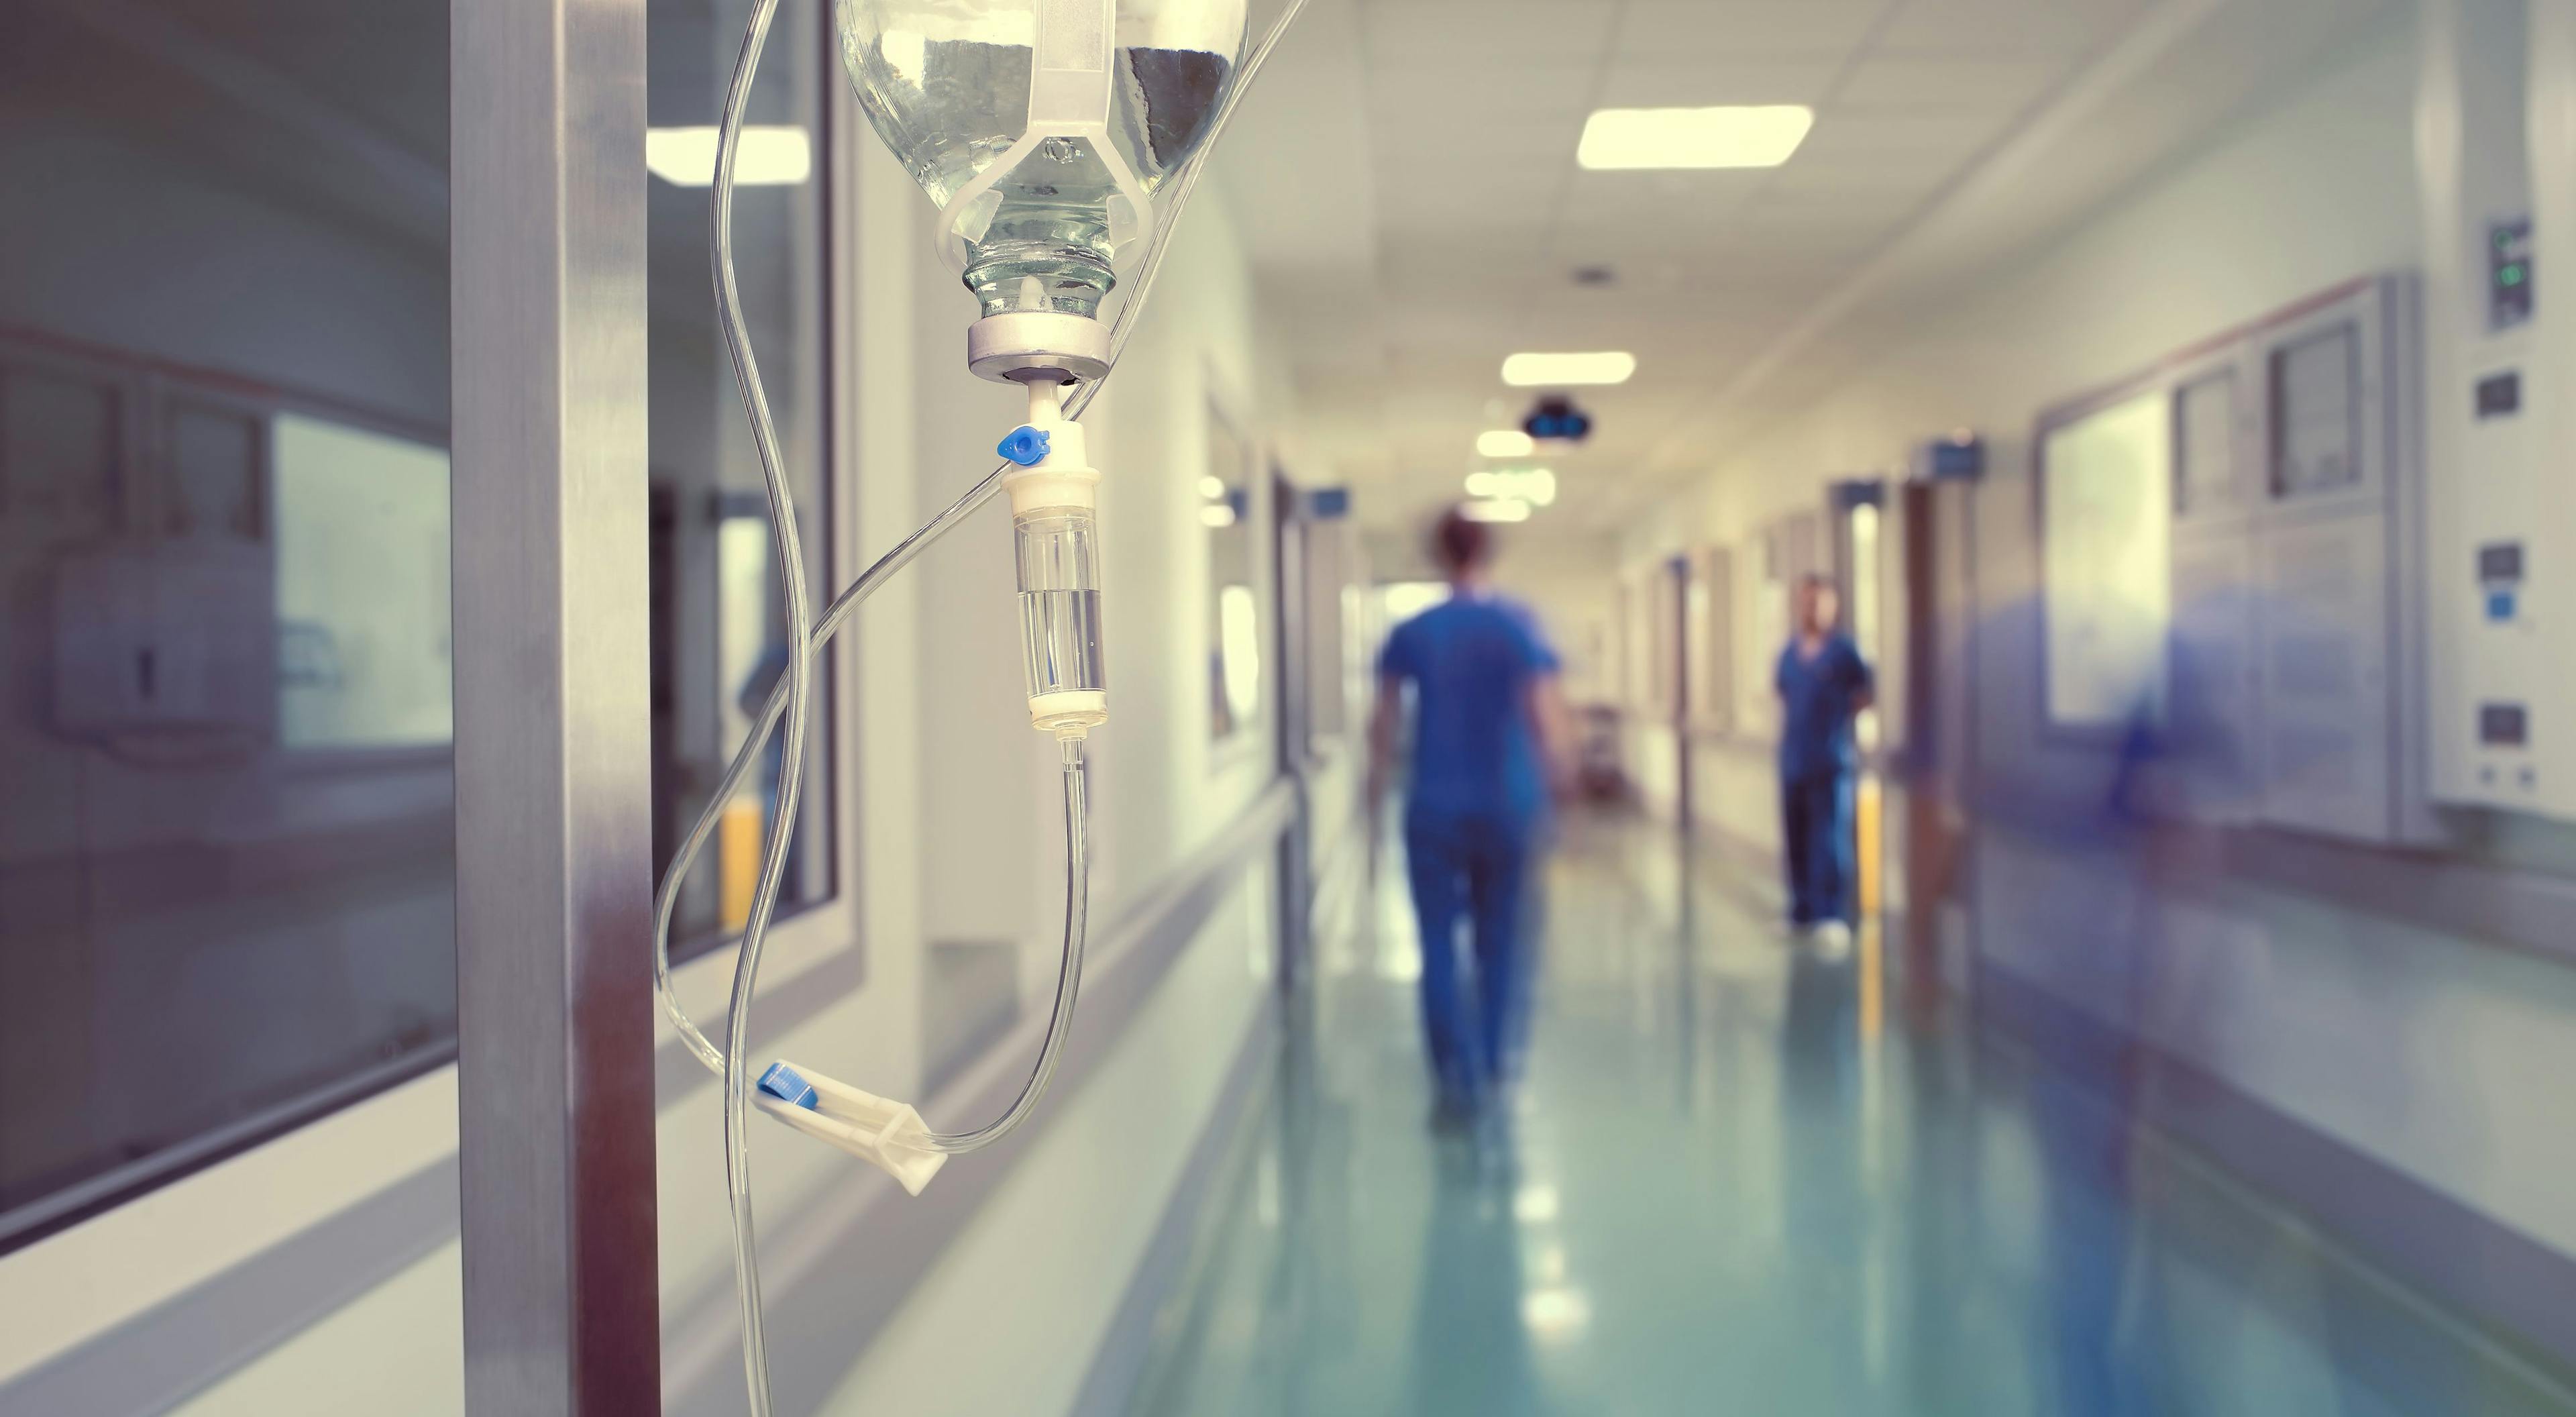 blurred hospital hallway with clinicians walking through